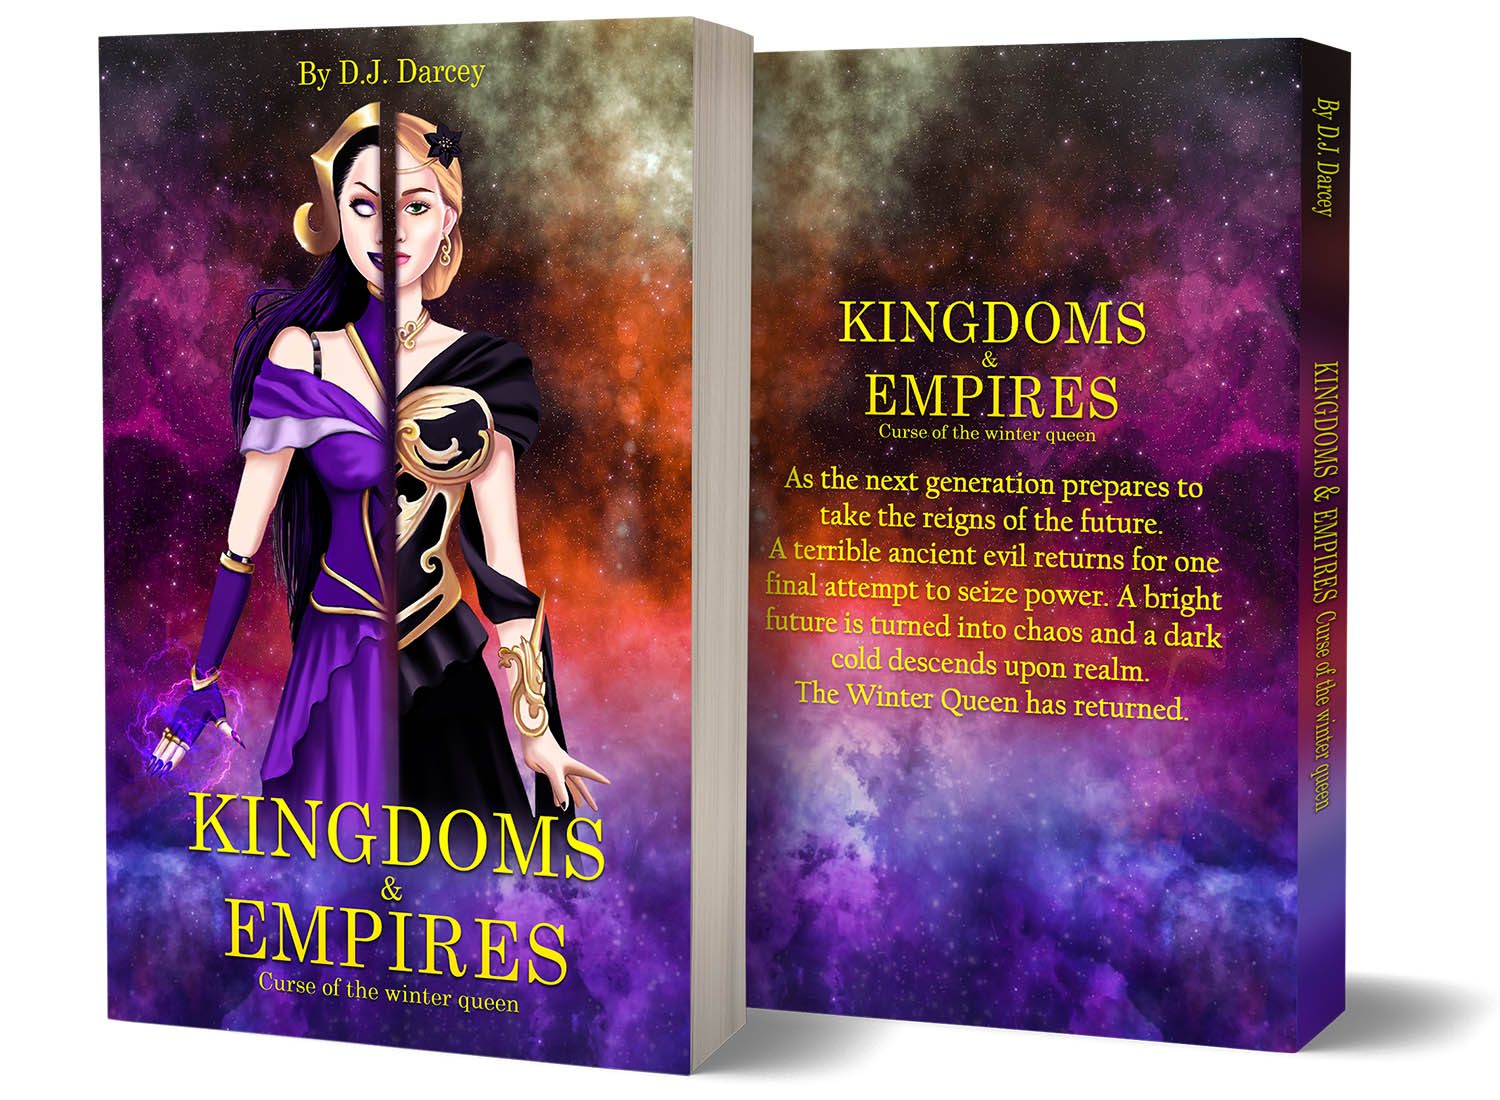 bookconsilio-portfolio-kingdomes-and-empires-curse-of-the-winter-queen-paperback-bookcoverdesign